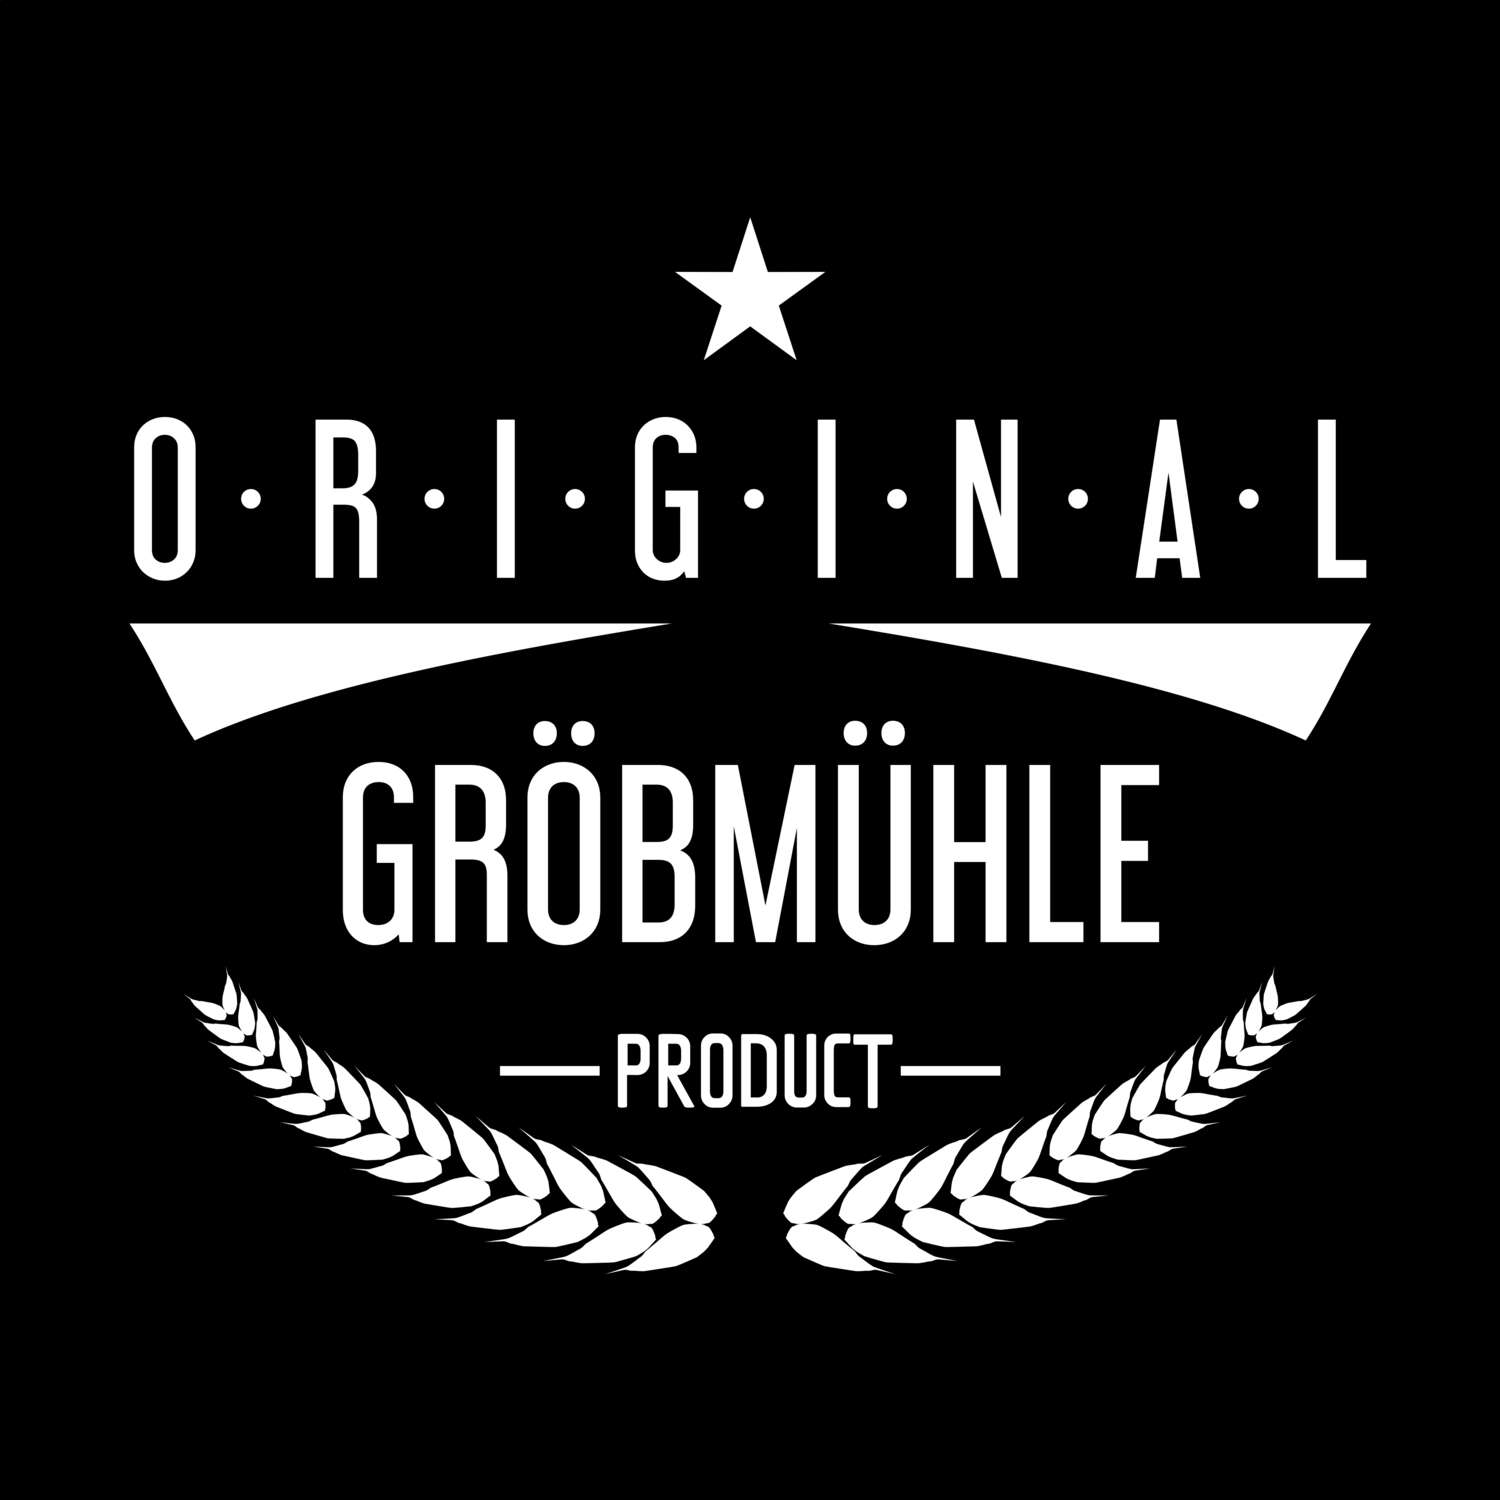 Gröbmühle T-Shirt »Original Product«